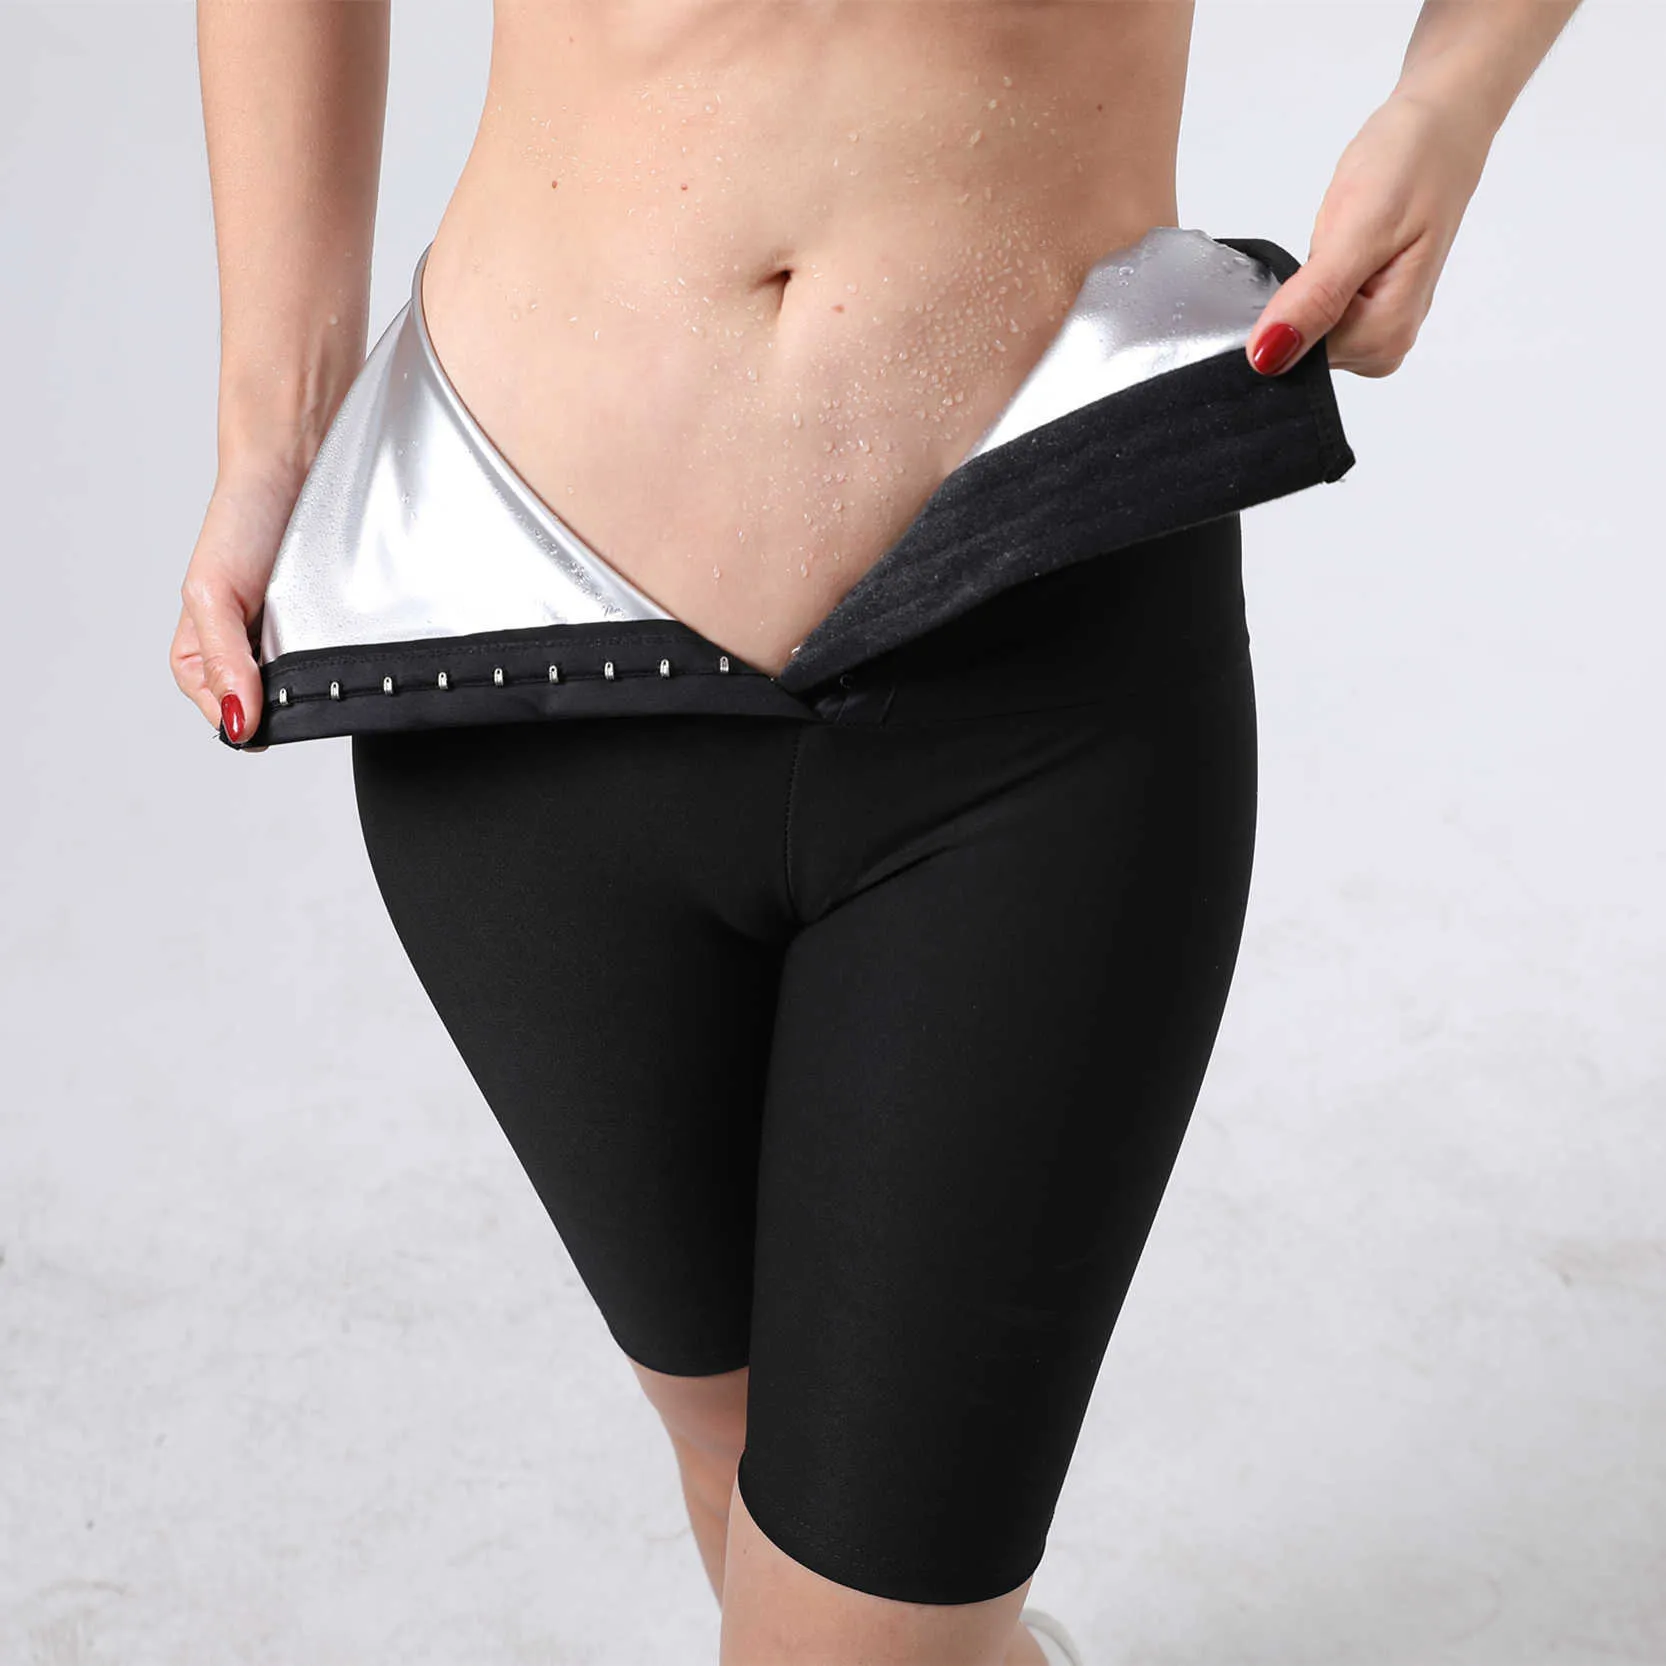 Kvinnor termo byxor suana svett kort byxa svettbyxor kroppen shaper slim butt lyftar tights mage kontroll trosor 210810